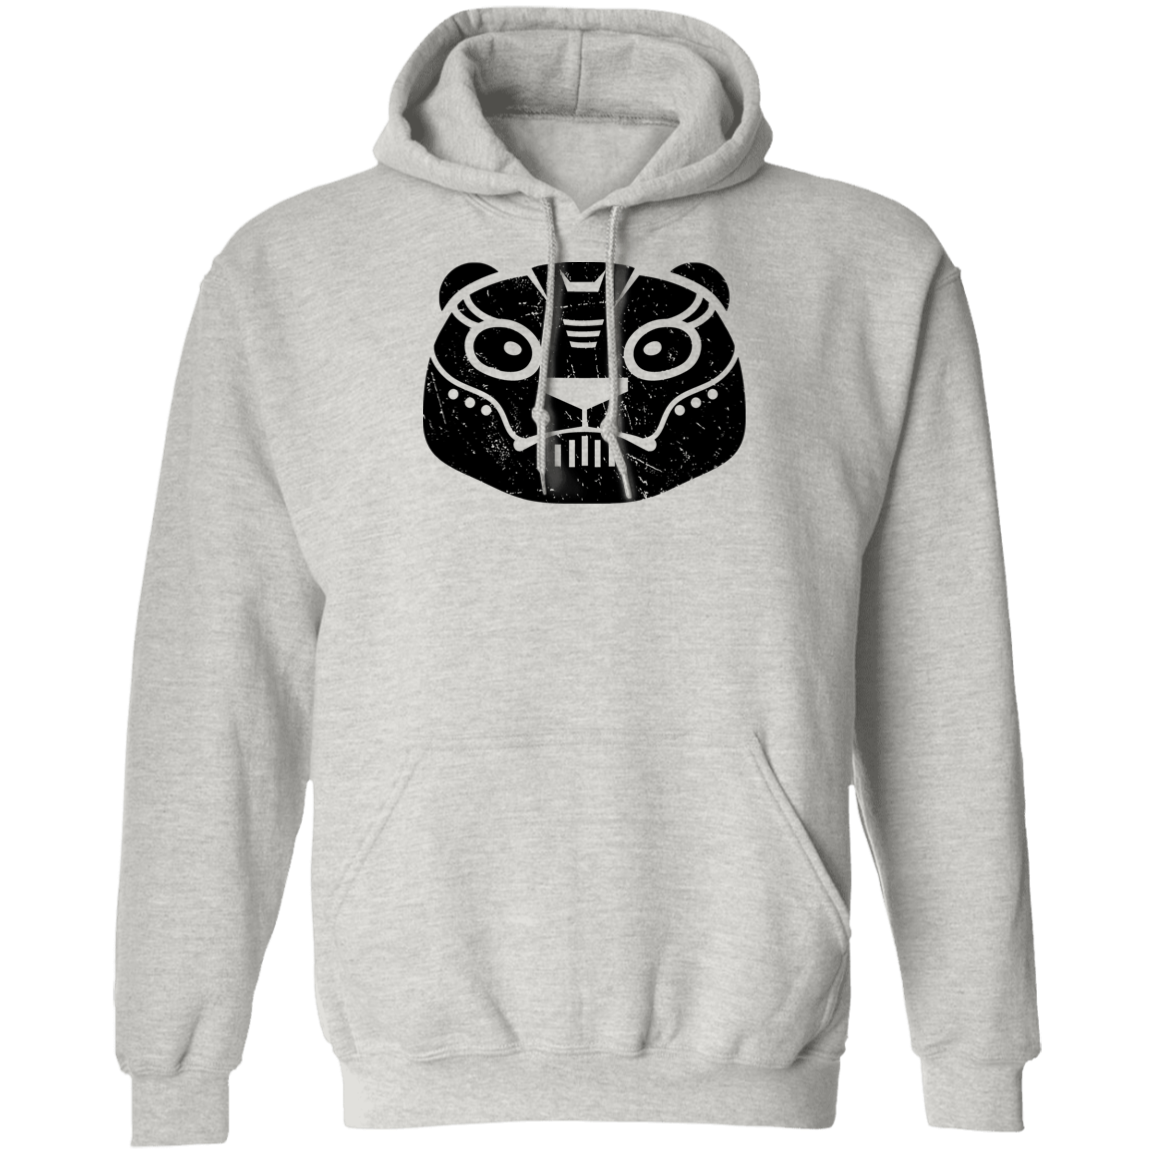 Black Distressed Emblem Hoodies for Adults (Polar Bear/Grit)